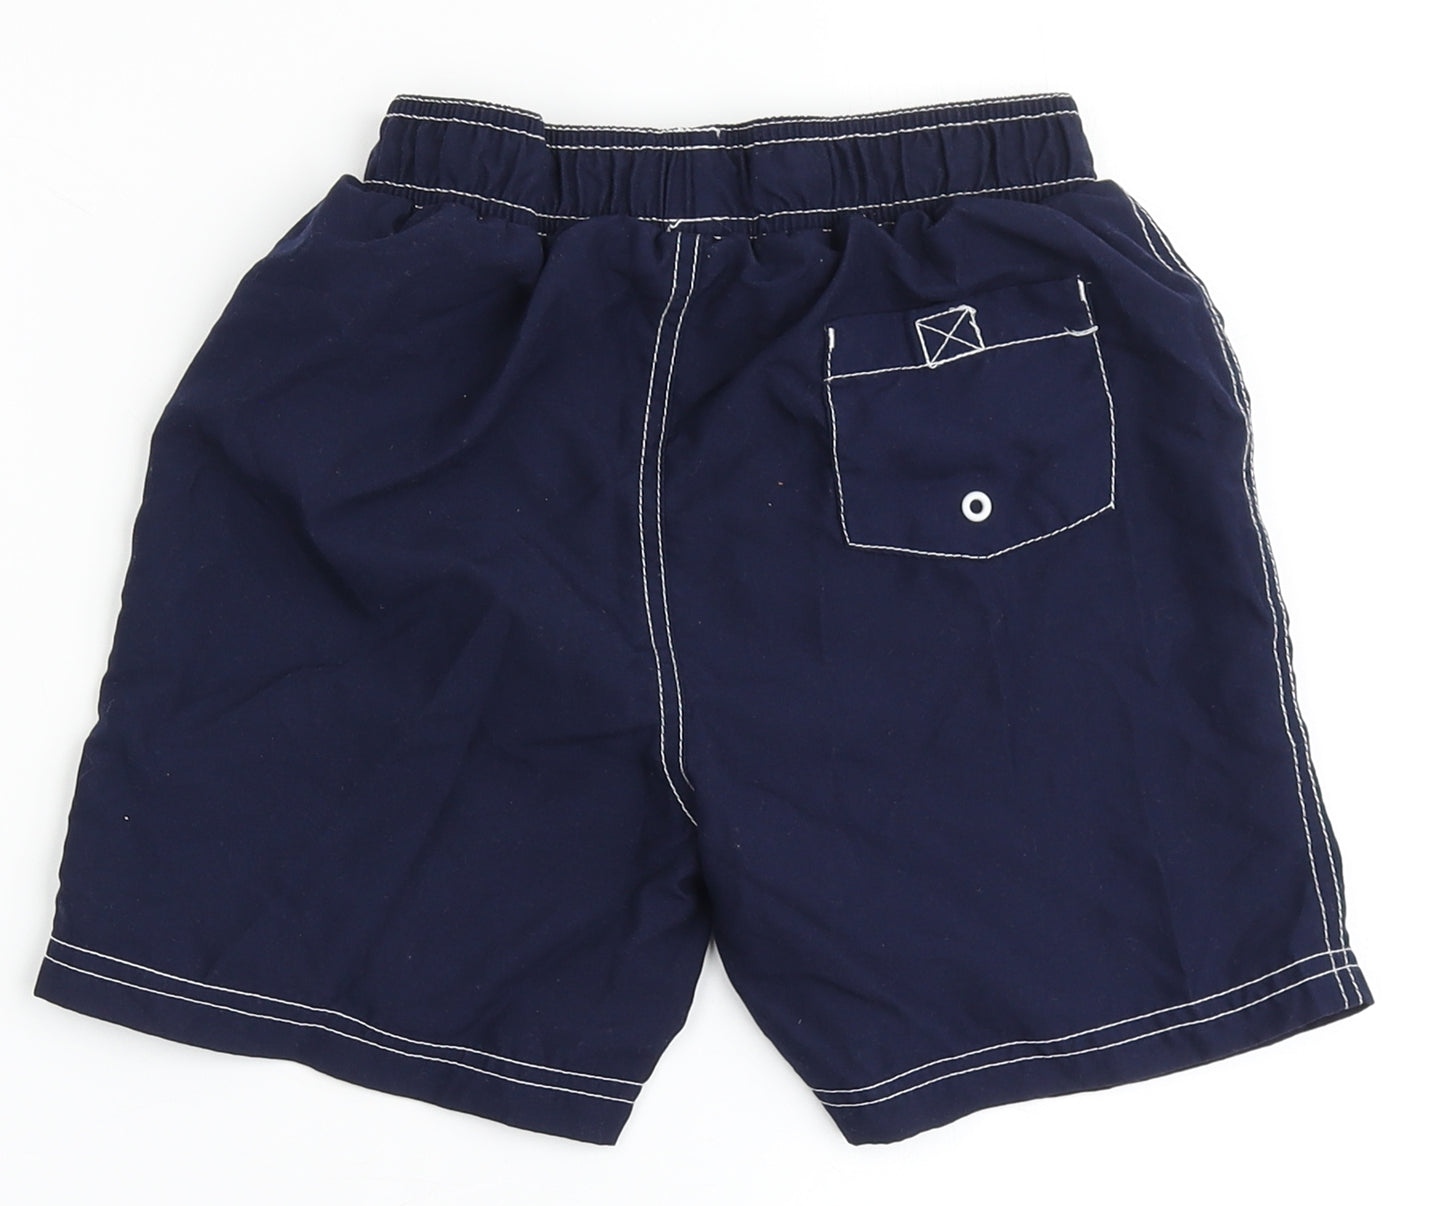 TU Boys Blue  Polyester Sweat Shorts Size 9 Years  Regular Drawstring - Swim Shorts